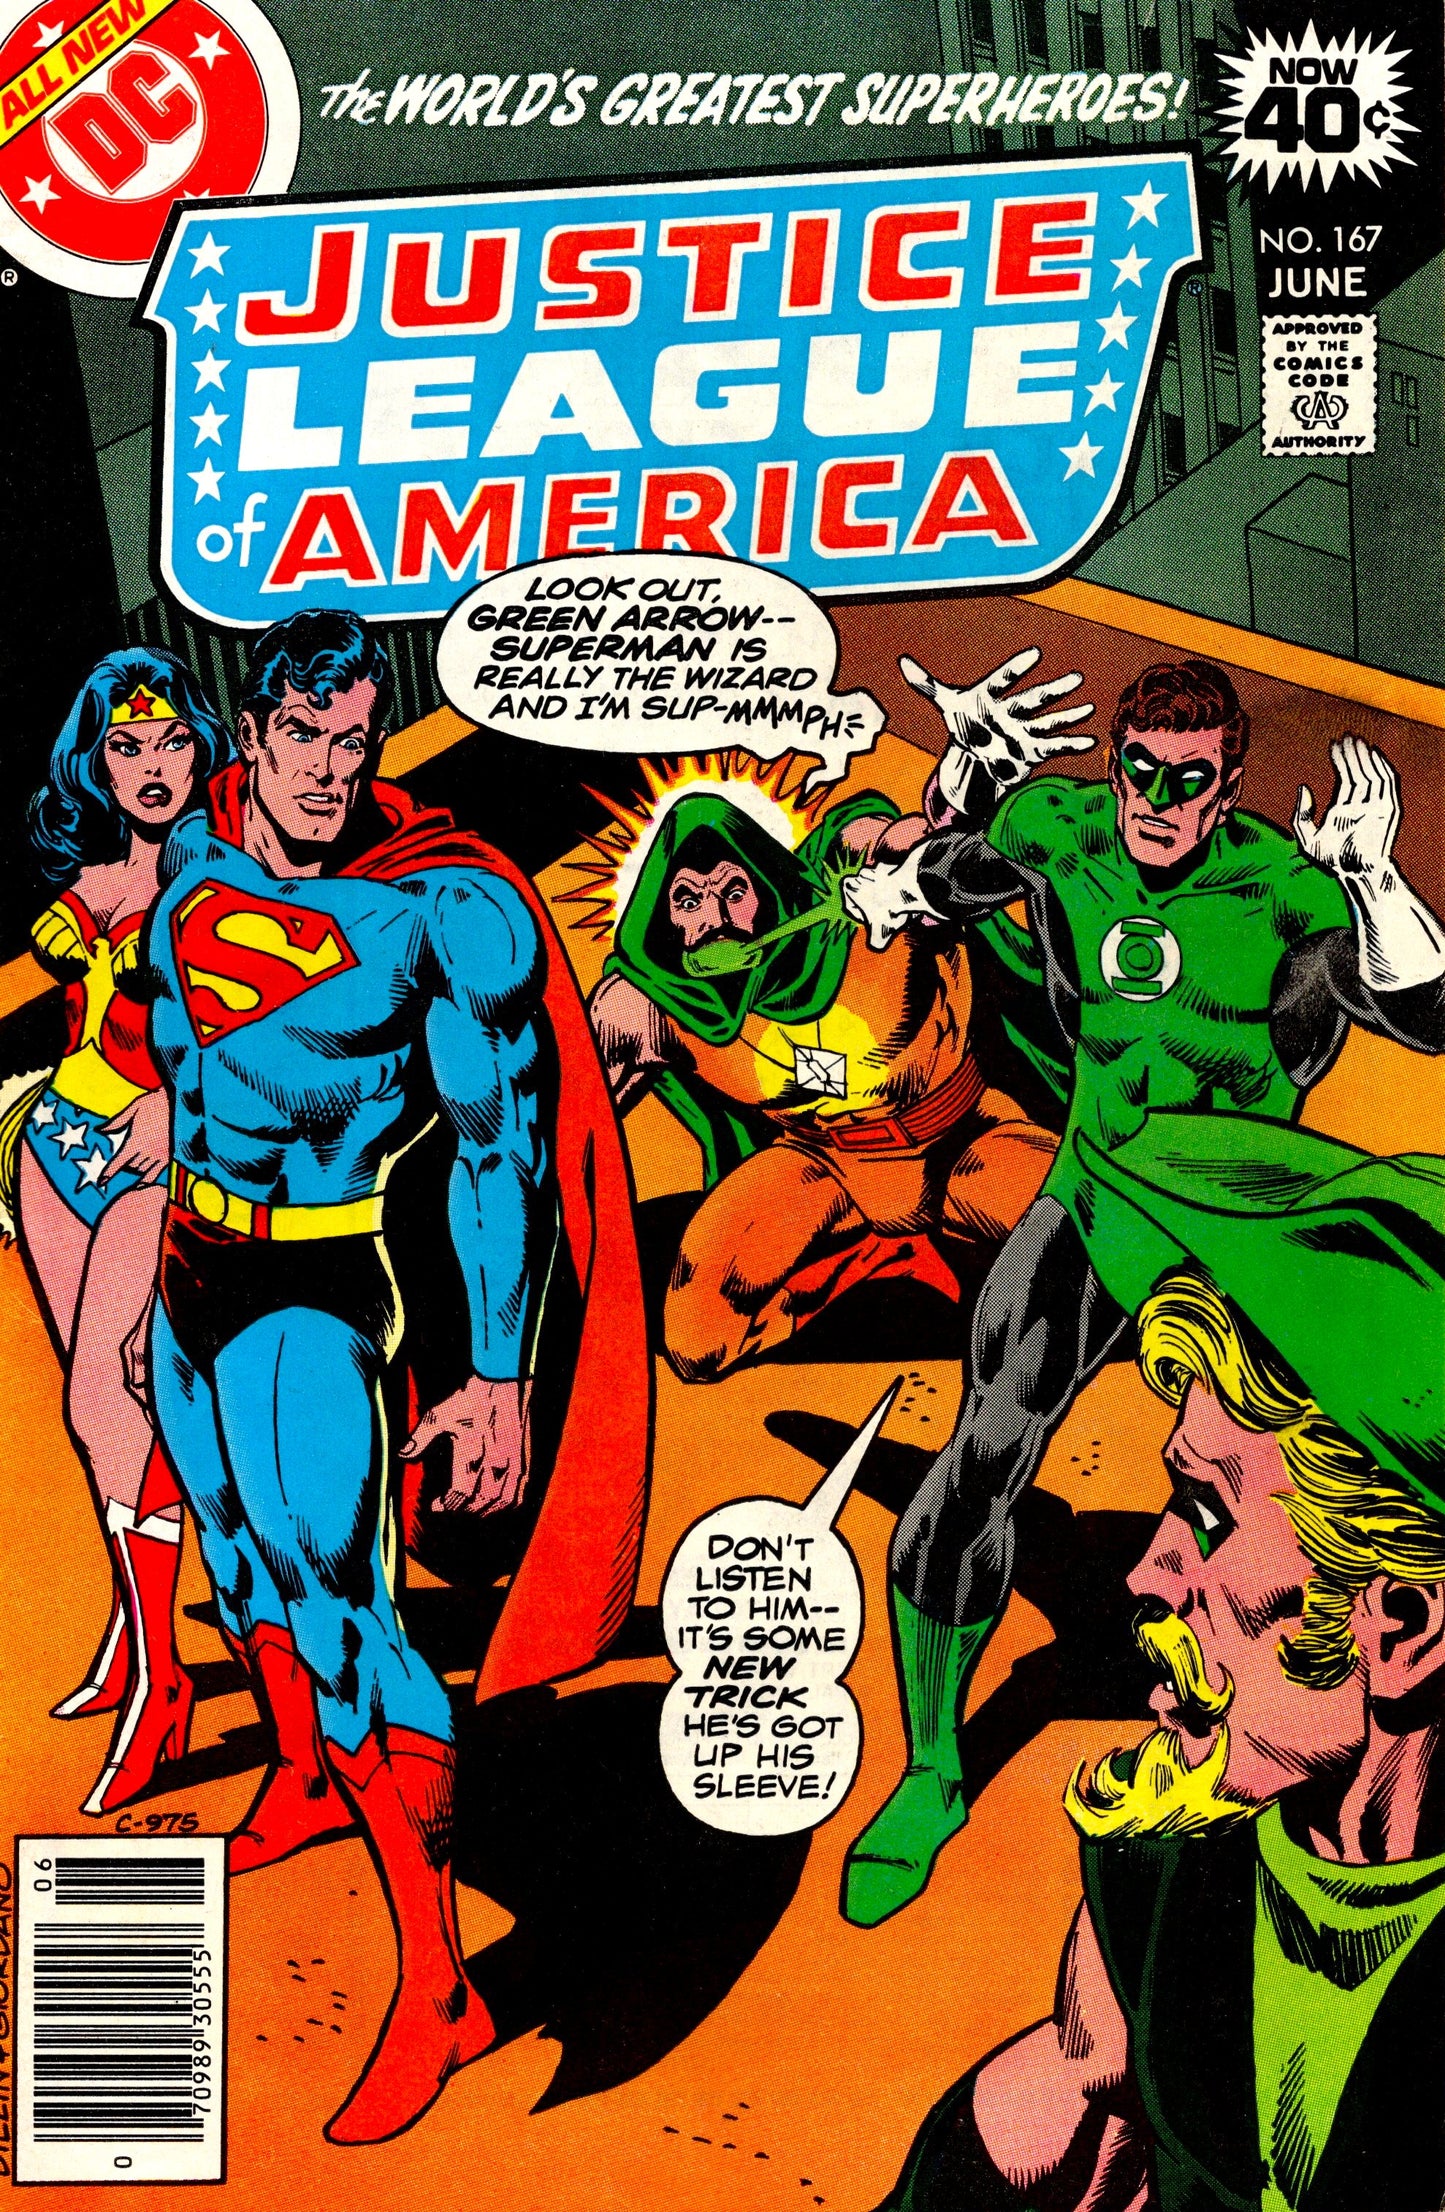 Justice League of America #167 (1960)